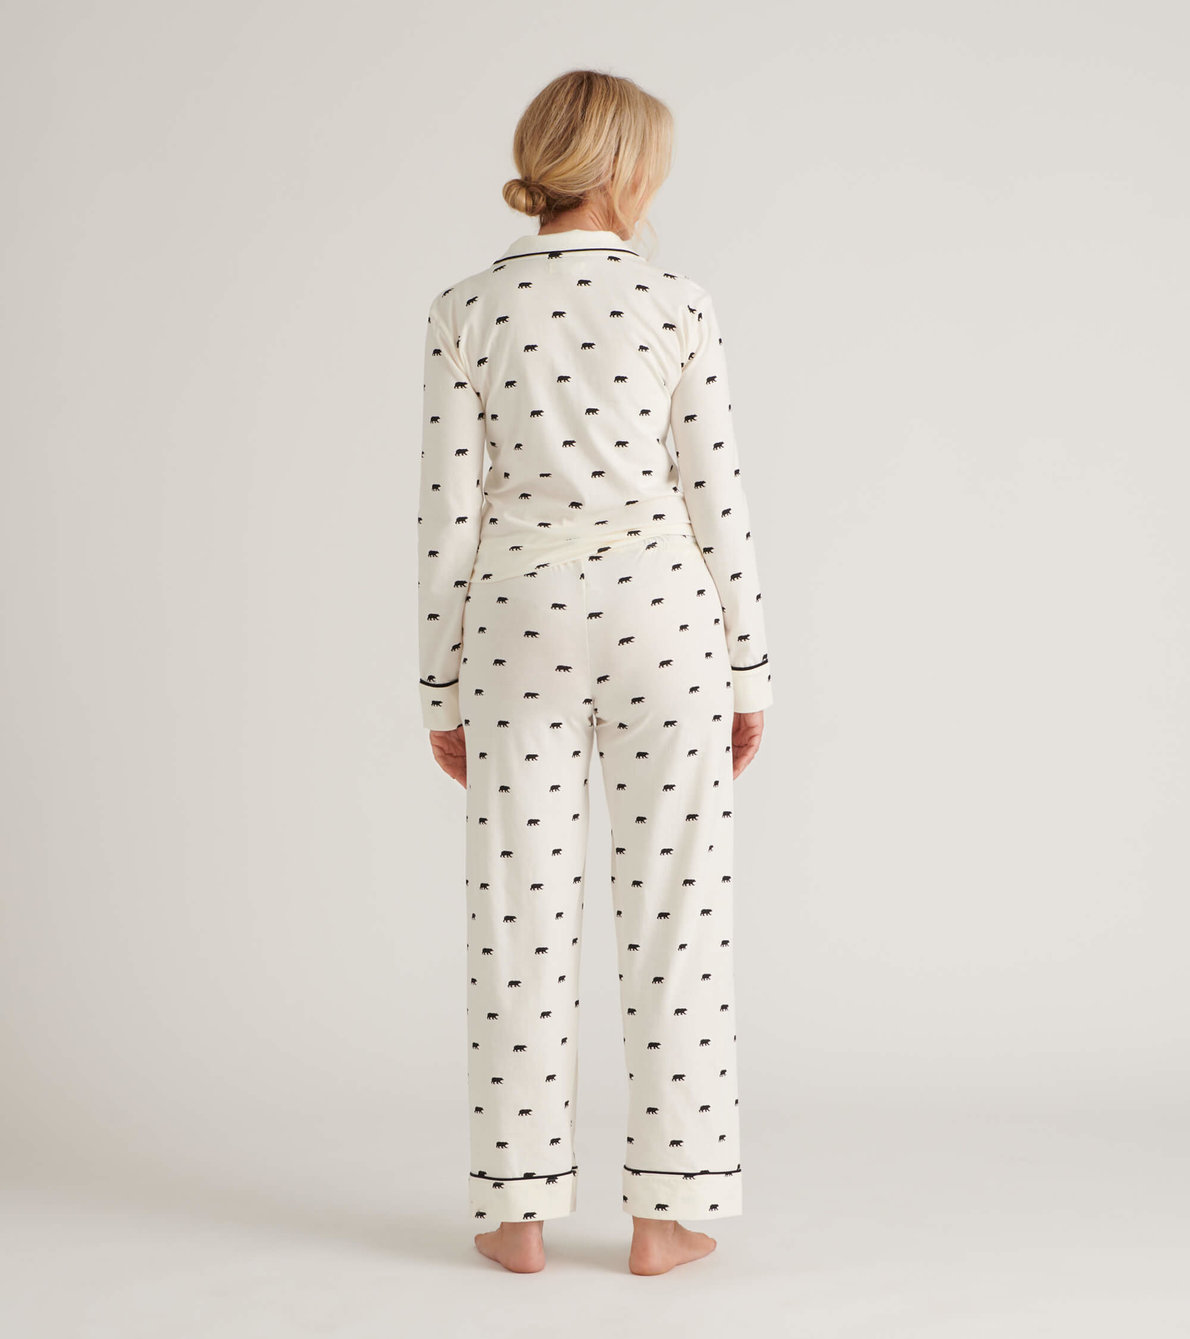 Agrandir l'image de Pyjama – Ours noirs